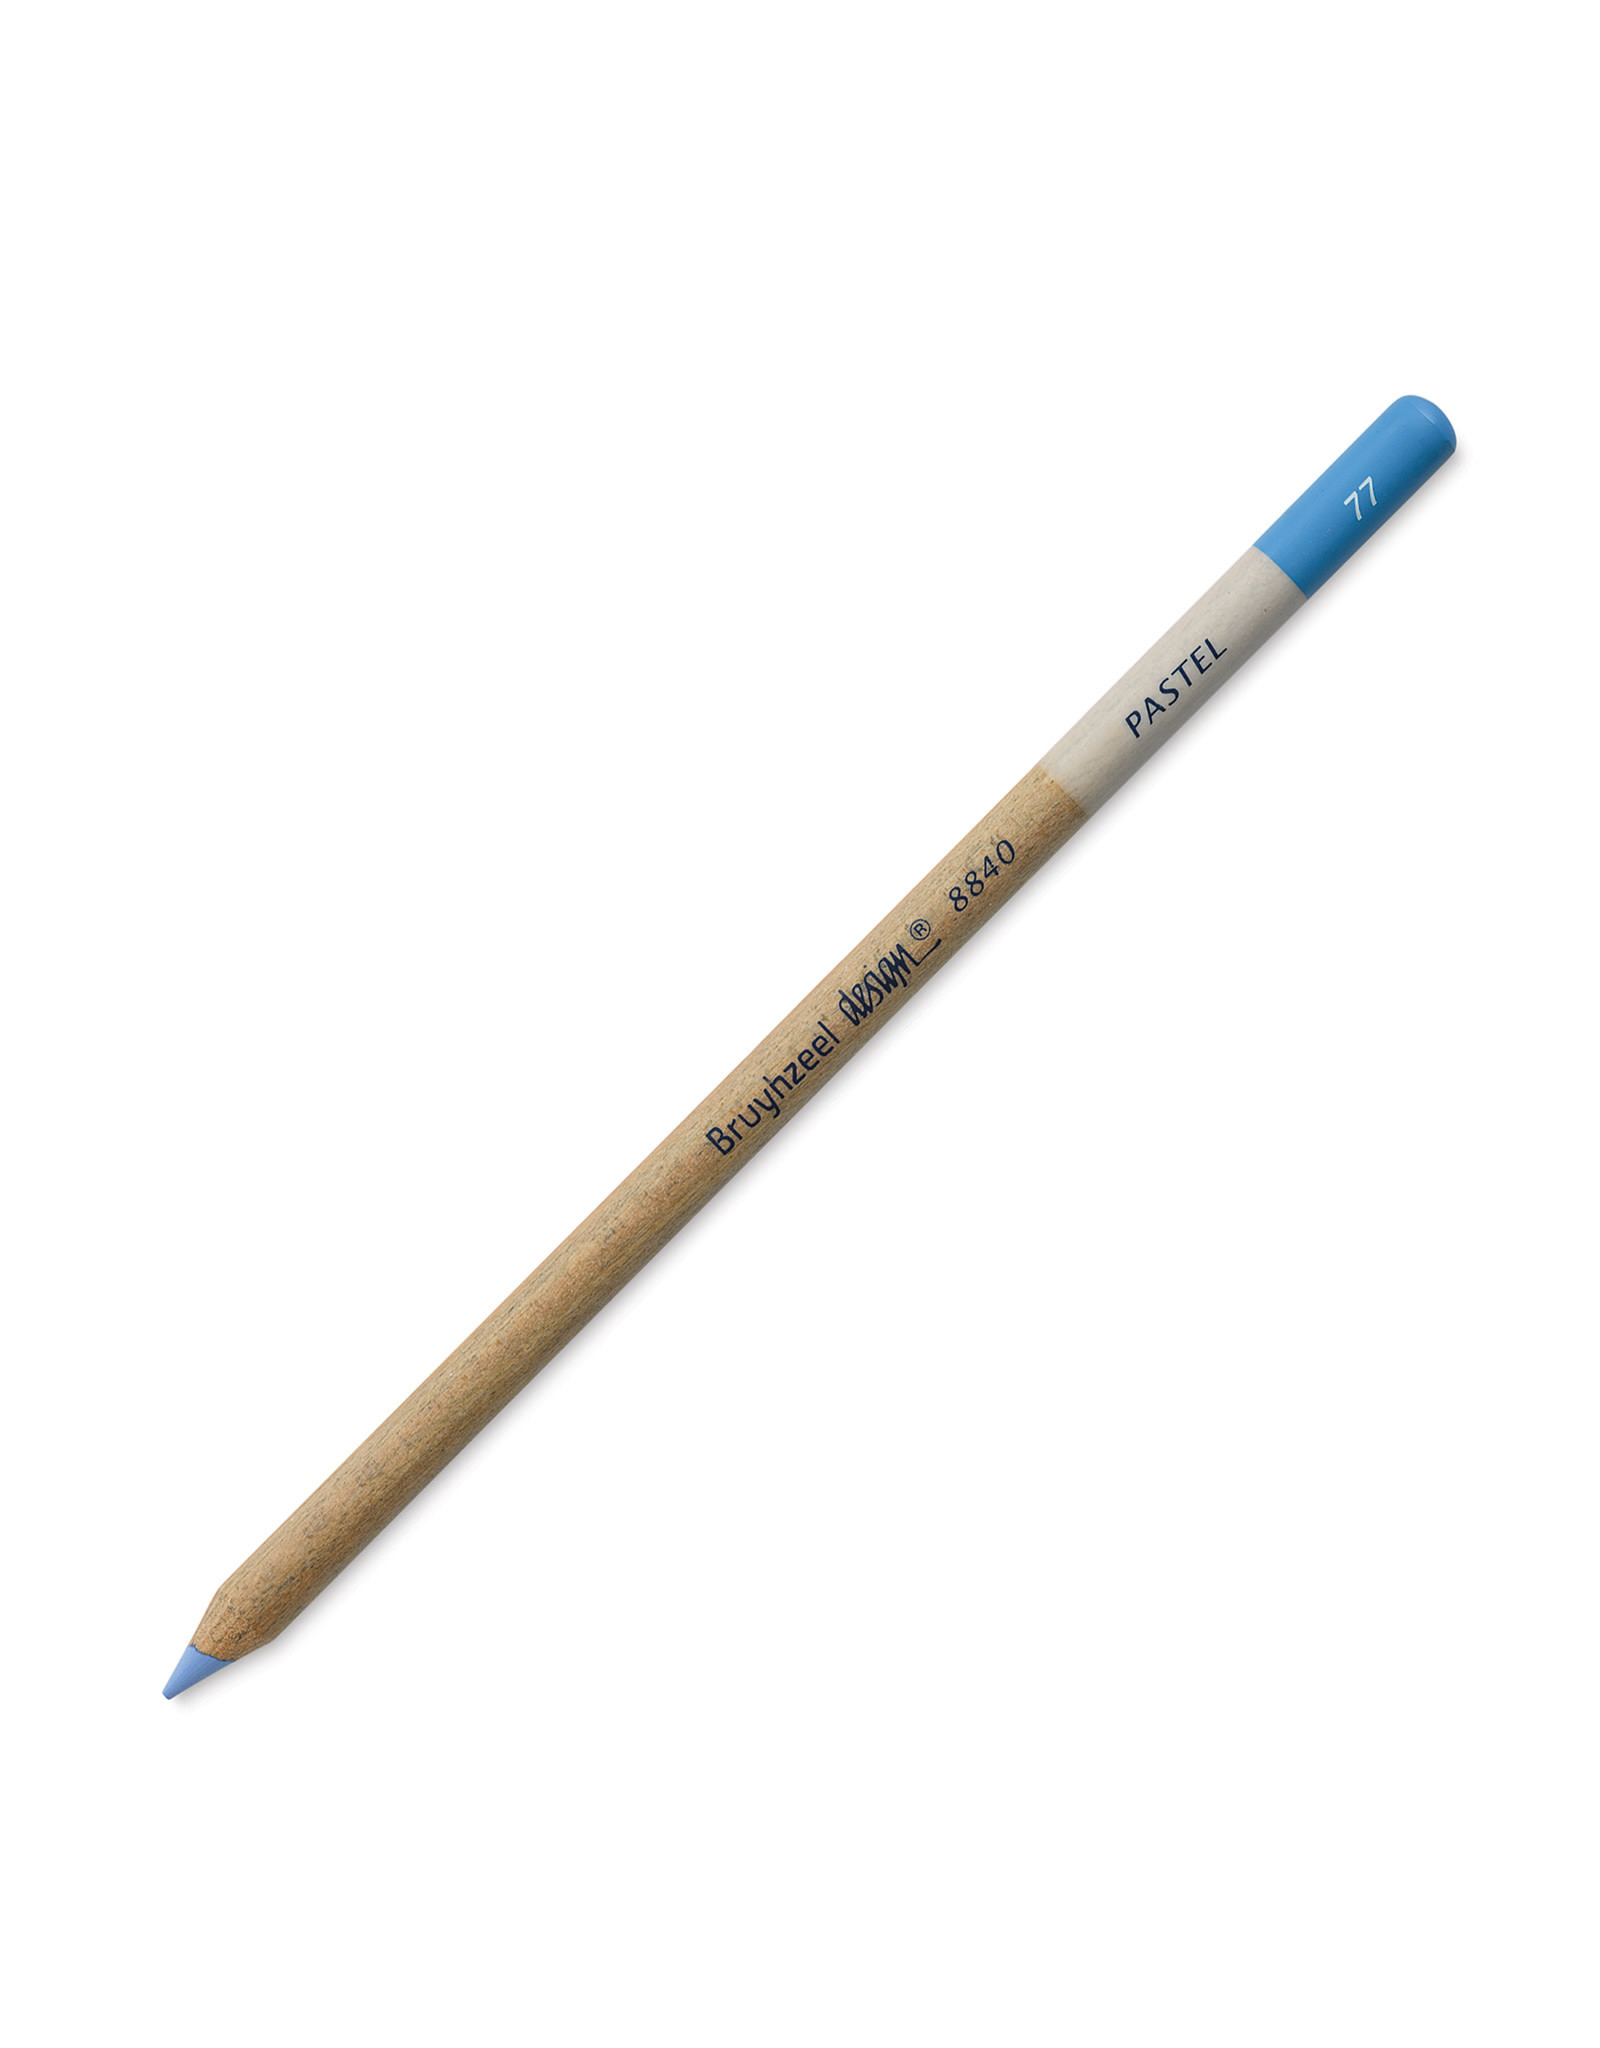 Royal Talens Bruynzeel Design Pastel Pencil, Light Ultramarine